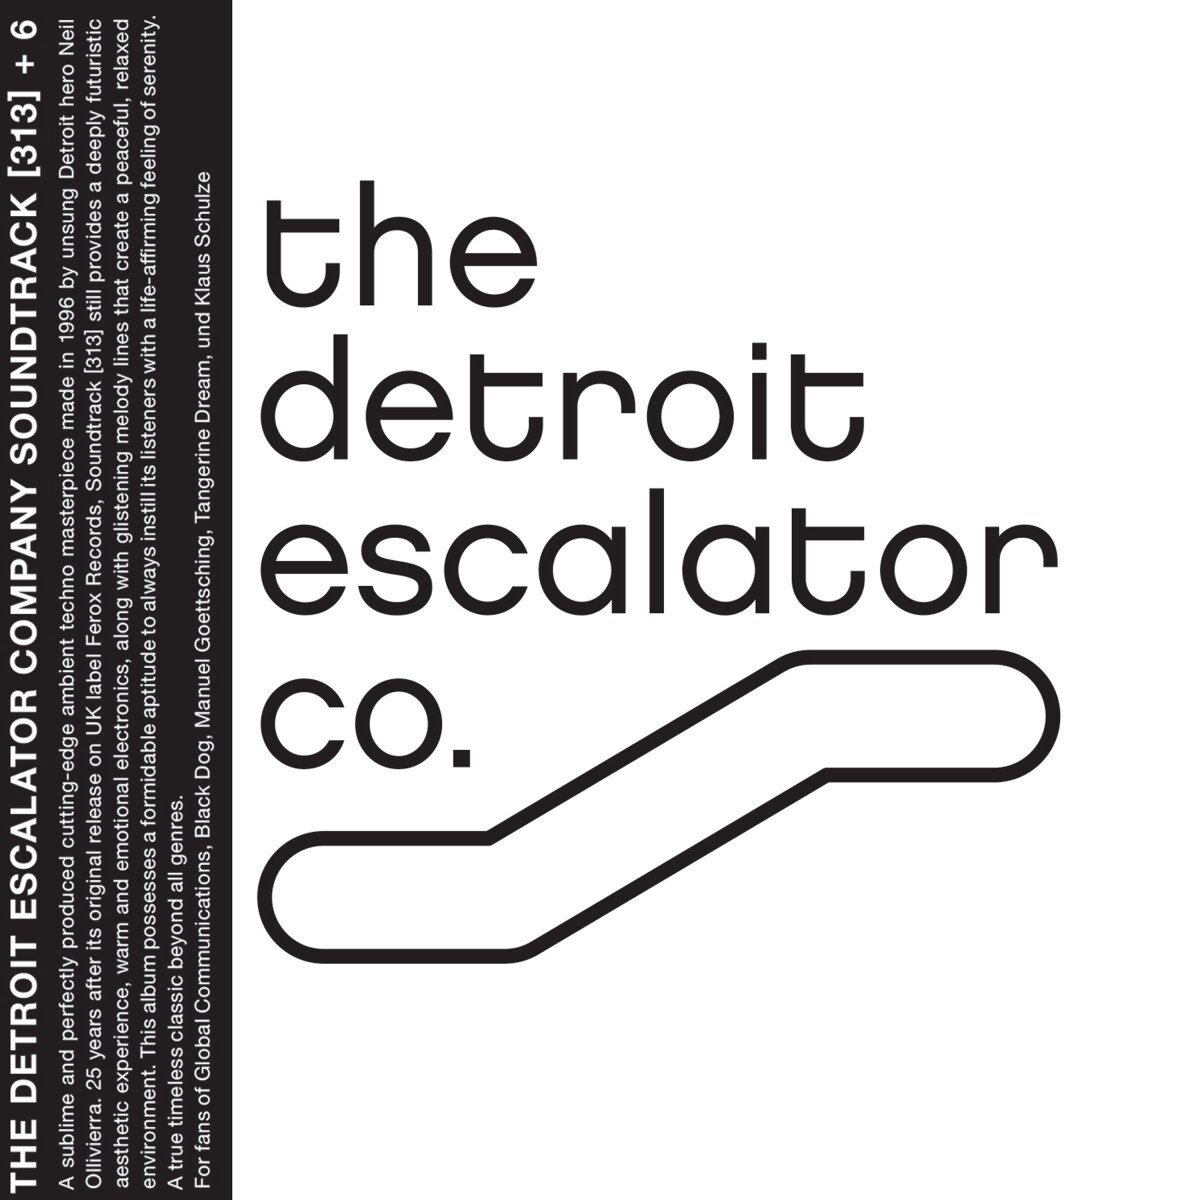 Detroit Escalator Co. - Soundtrack 313 (CD)